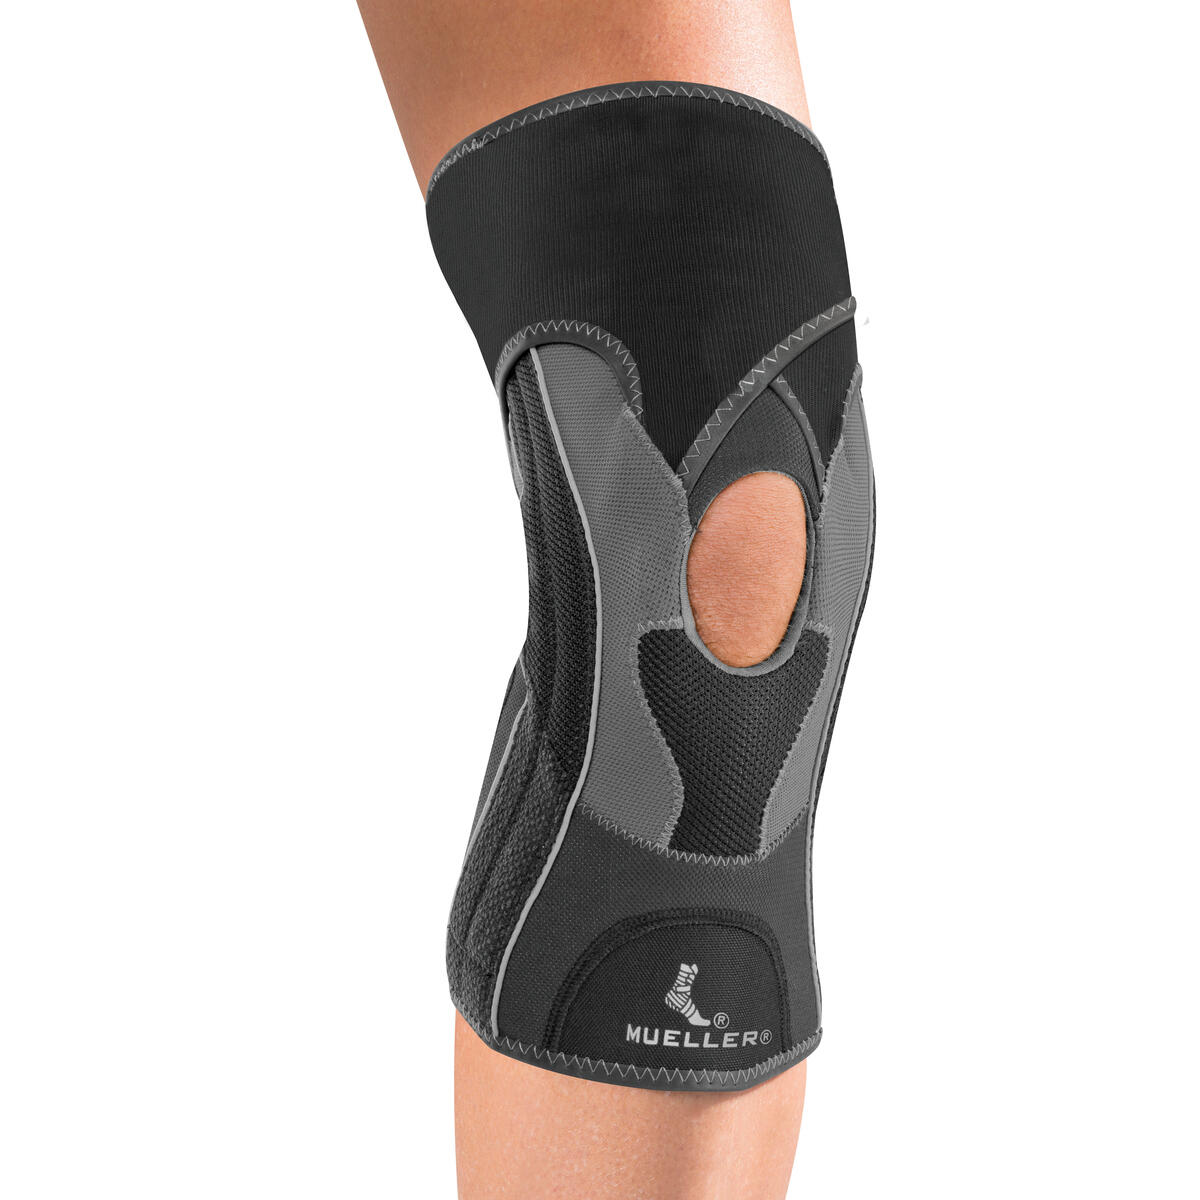 MUELLER Mueller HG80 Knee Brace Compression Support for Sport (XXL)